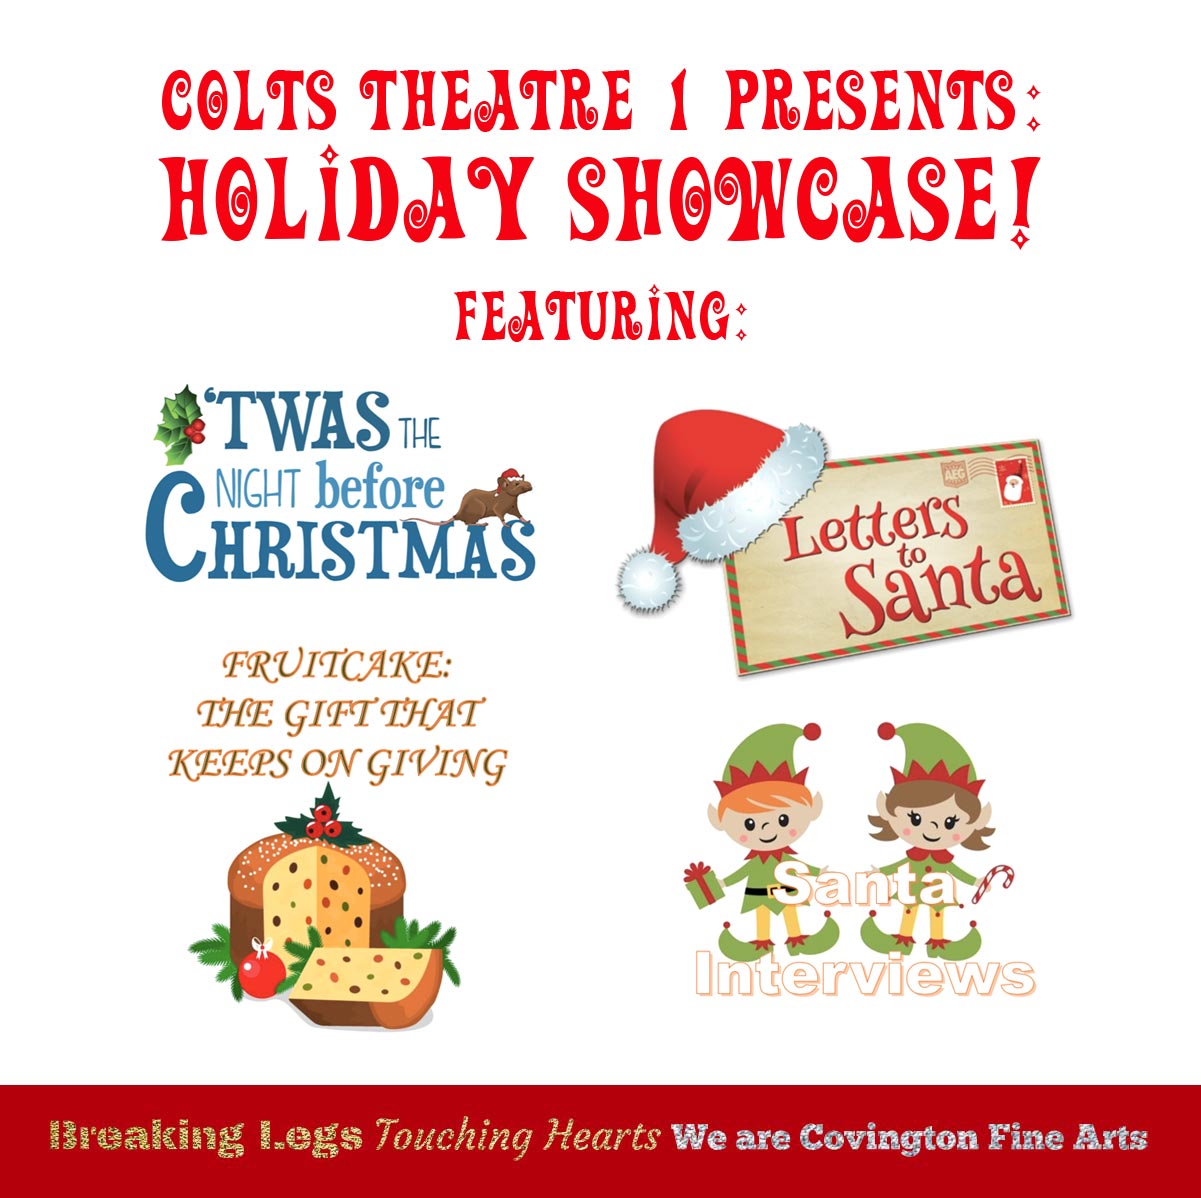 Theatre 1 Holiday Showcase